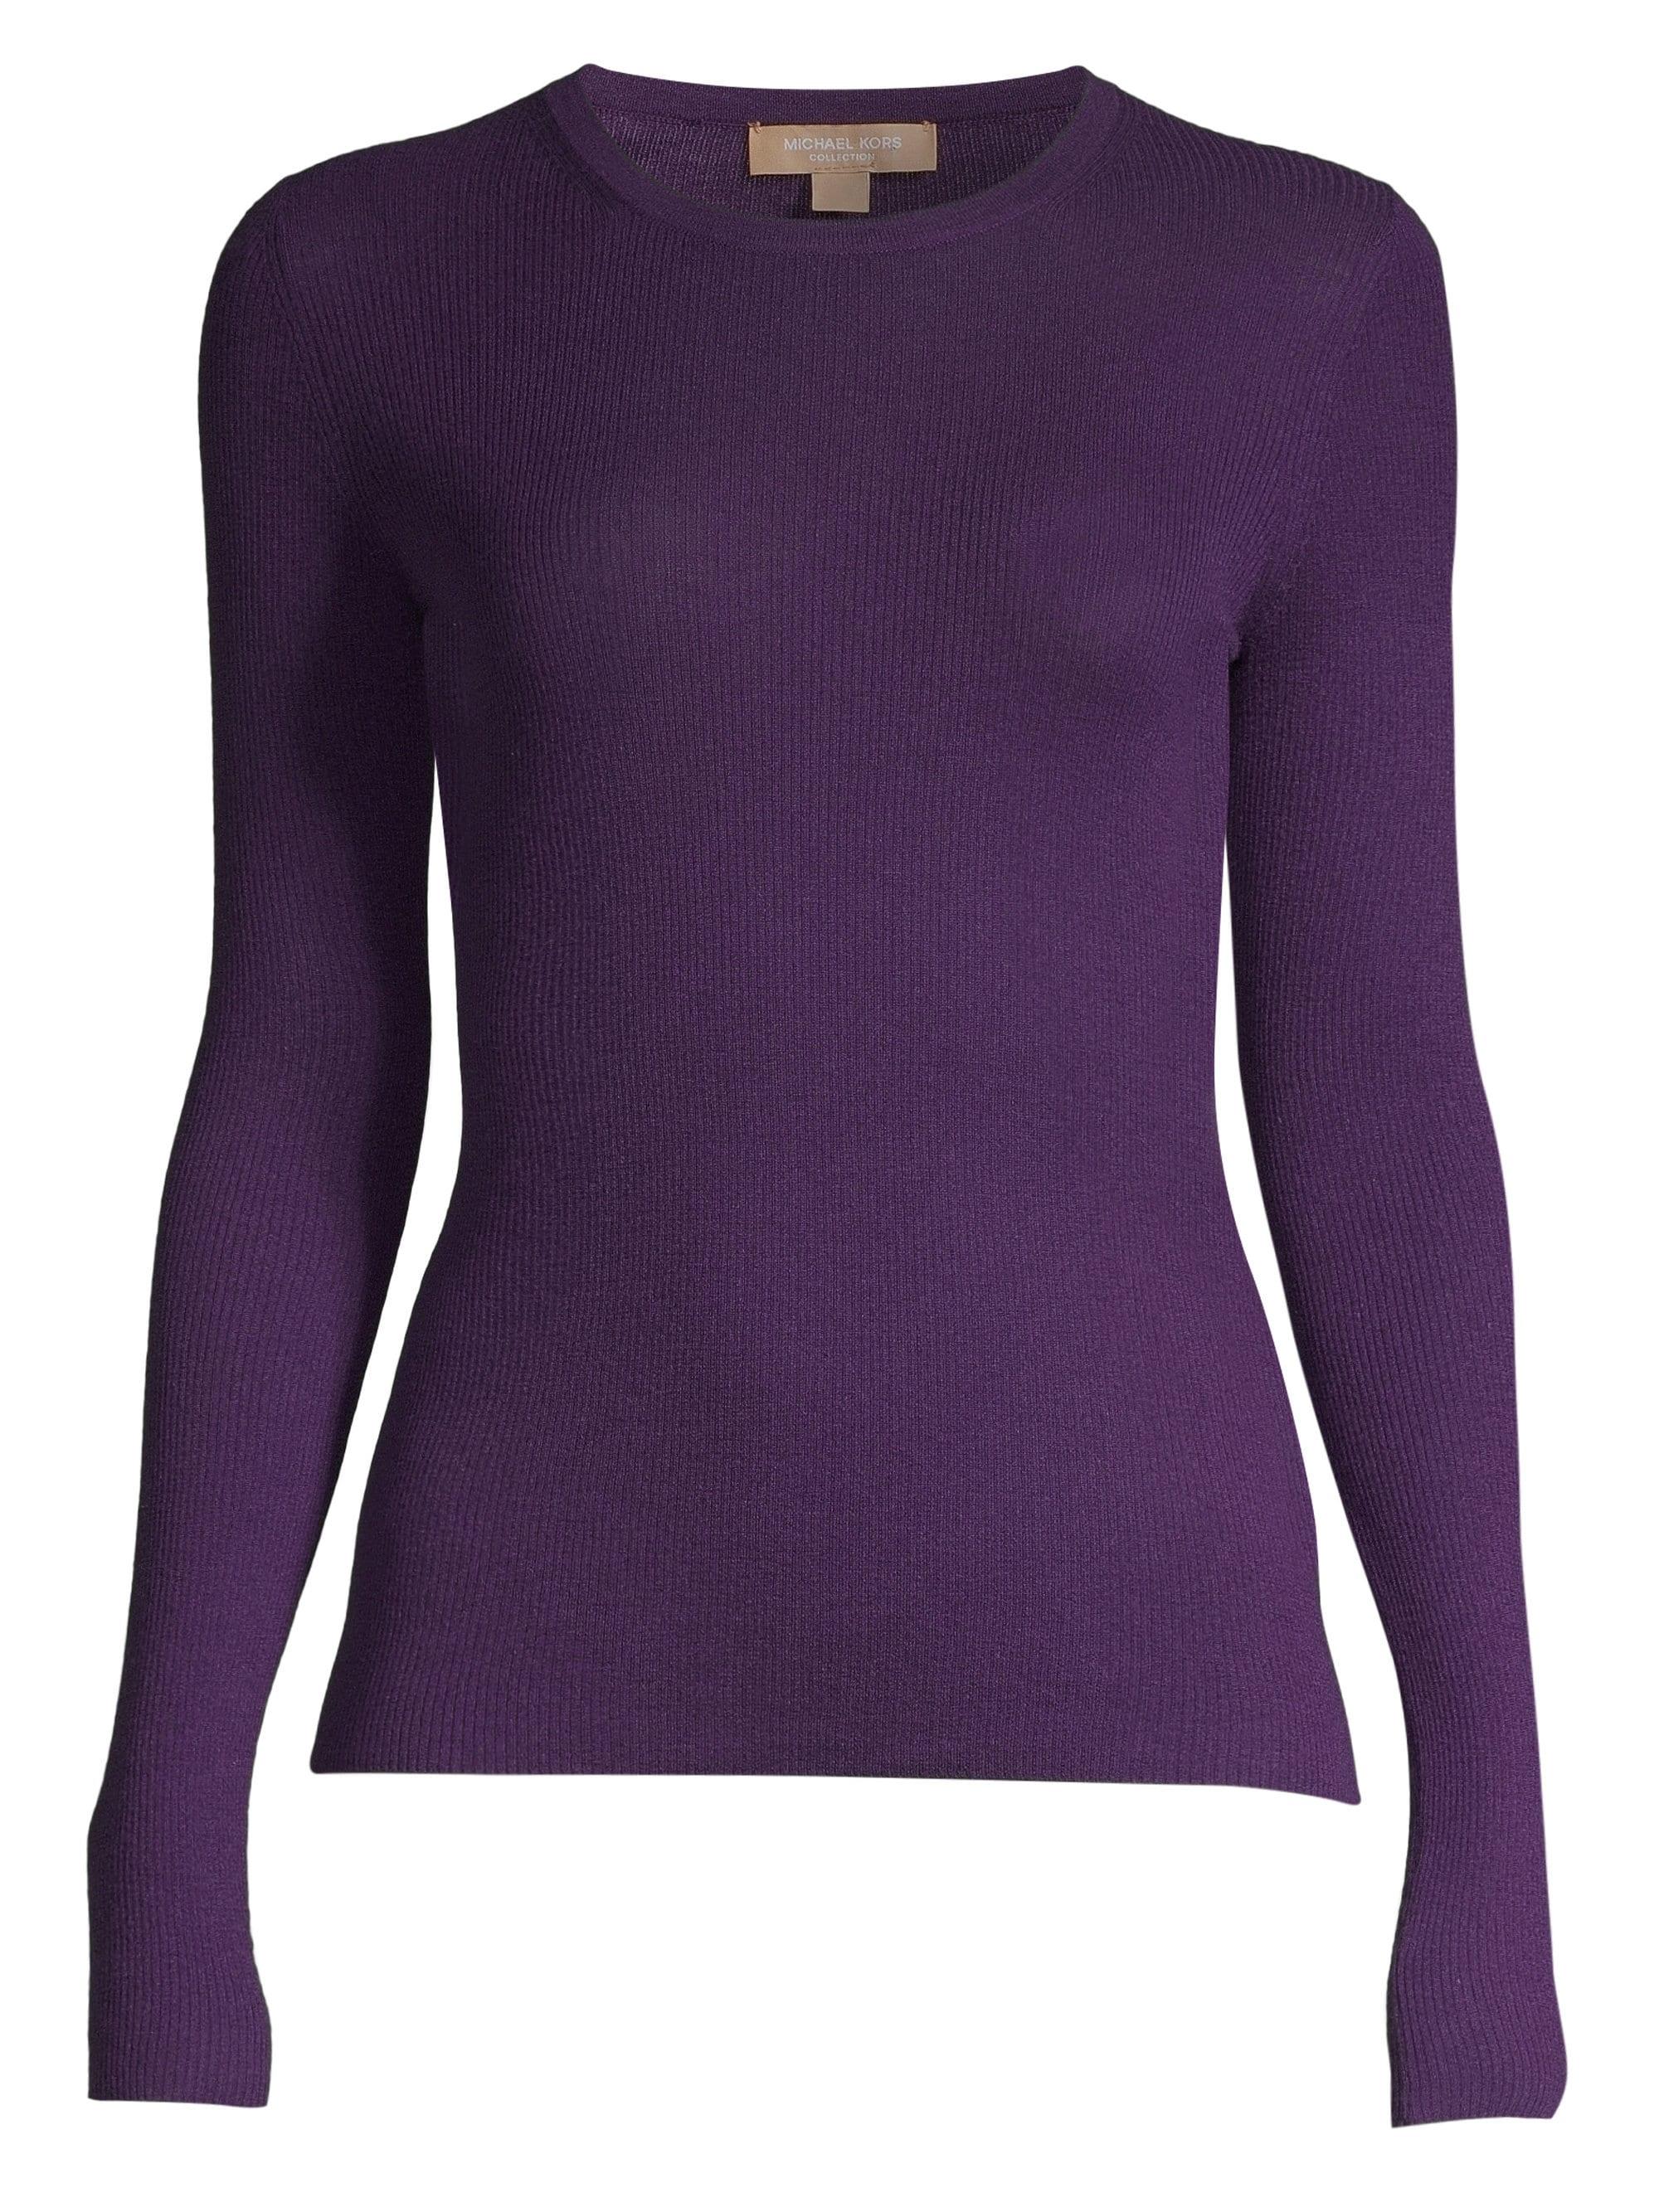 Michael Kors Long-sleeve Cashmere Sweater in Purple - Lyst